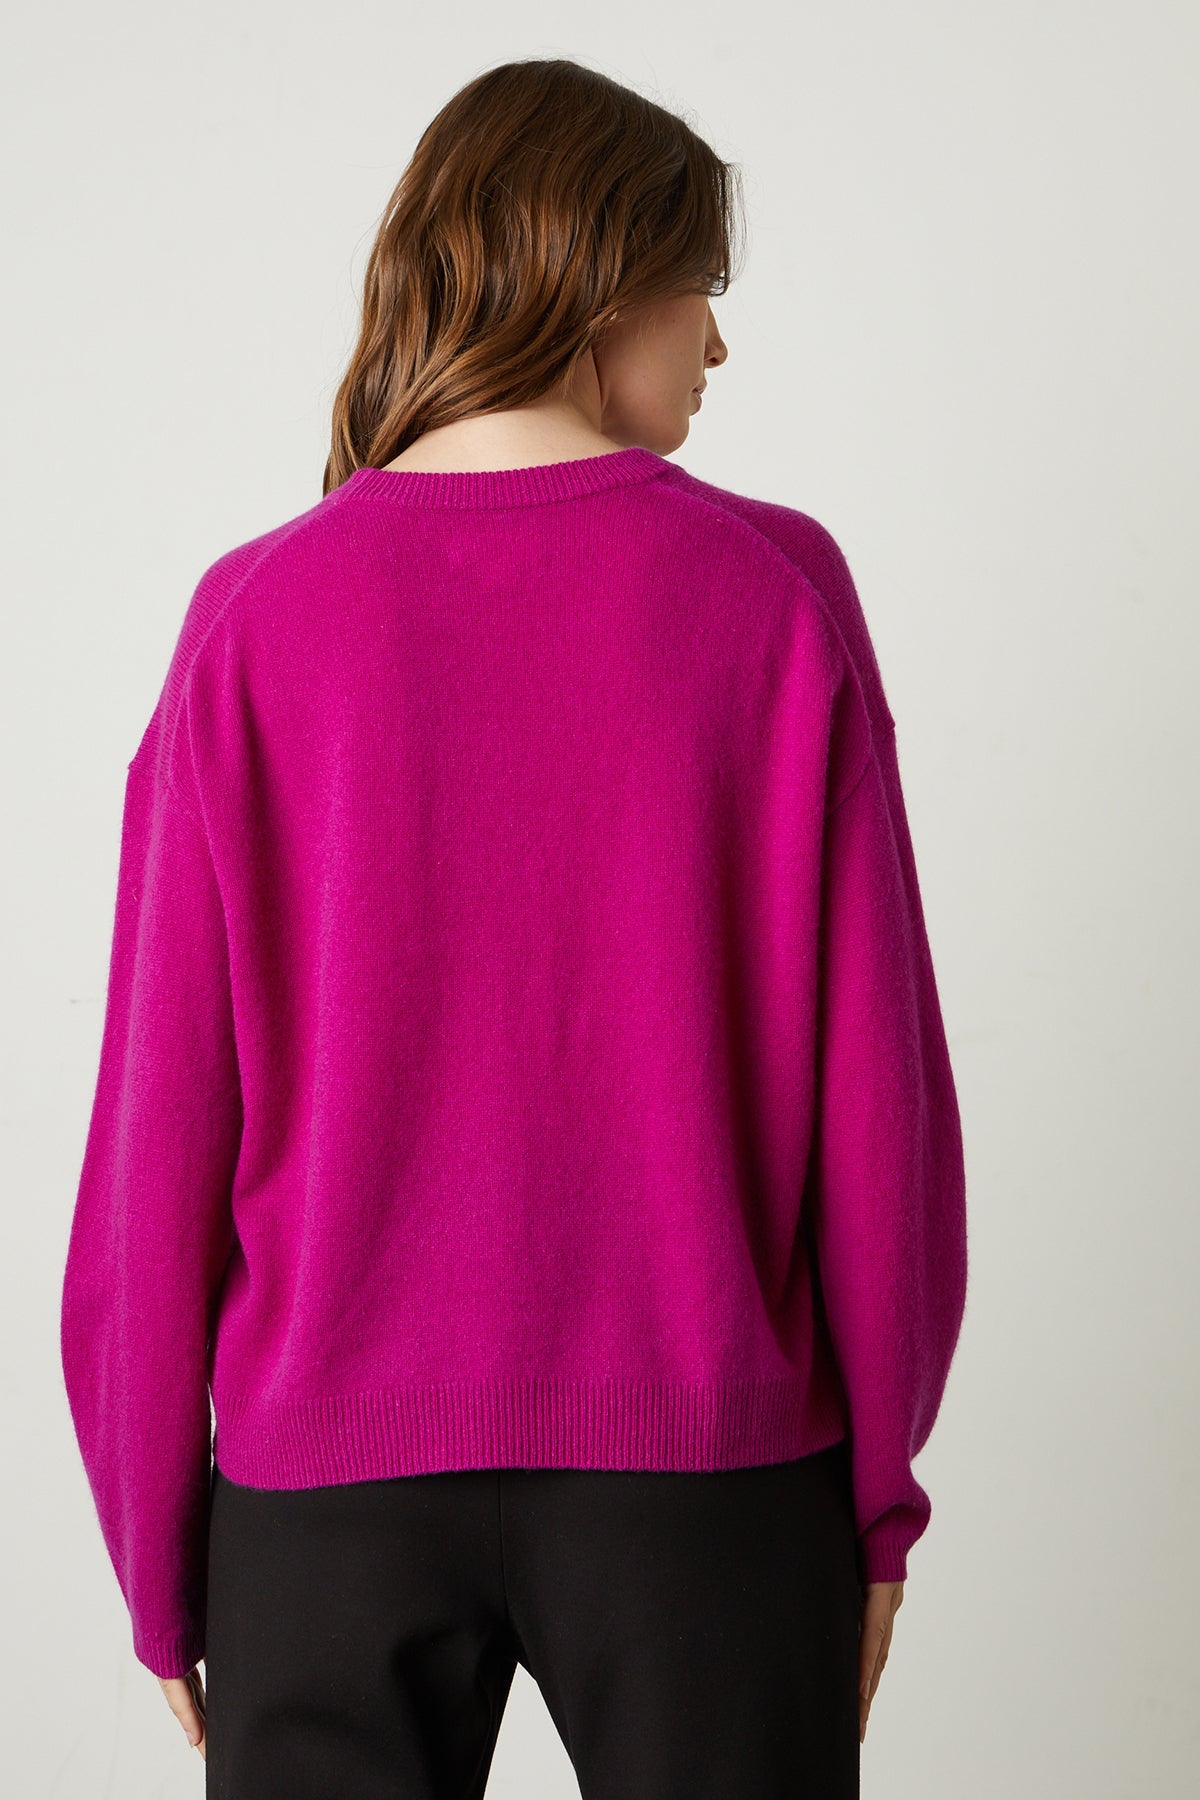 Brynne Cashmere Crew Neck Sweater in bright magenta pink back-26677208514753